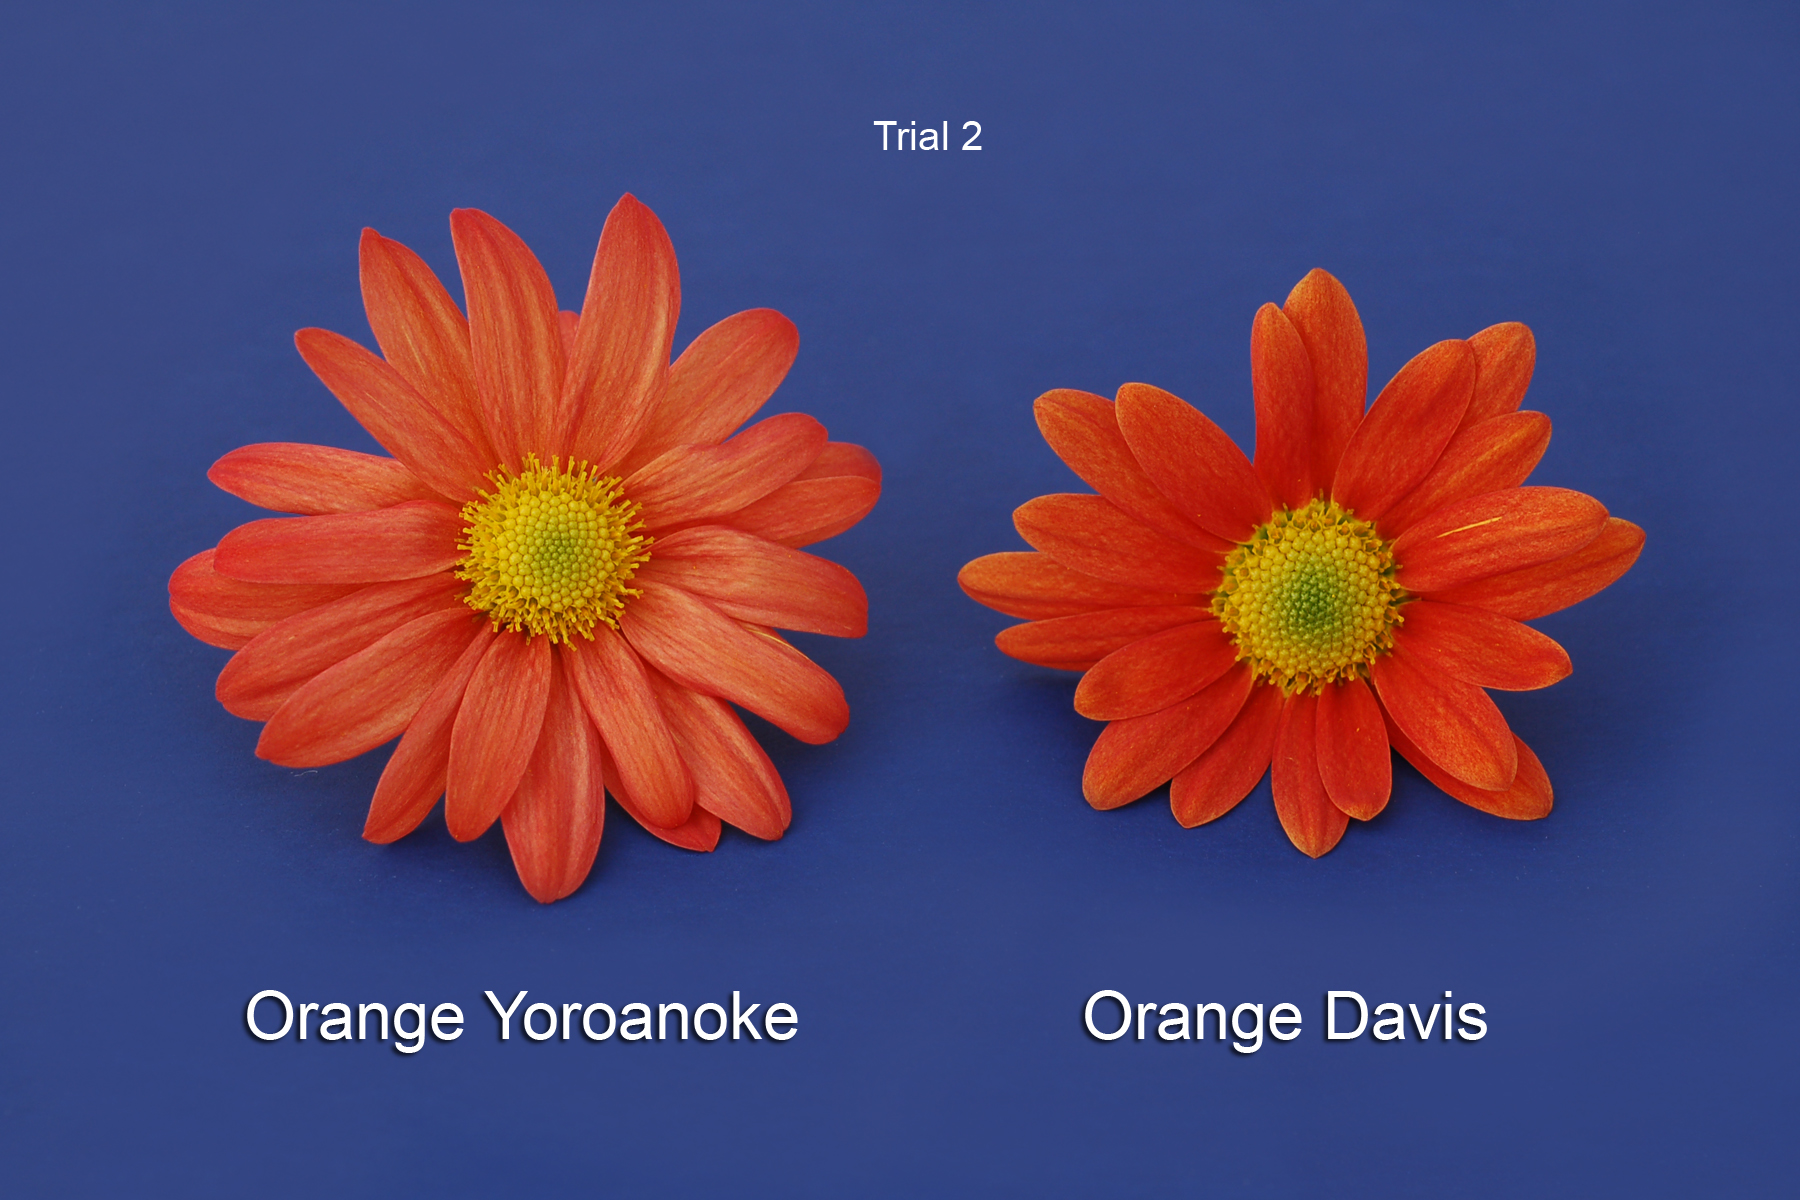 Orange Yoroanoke